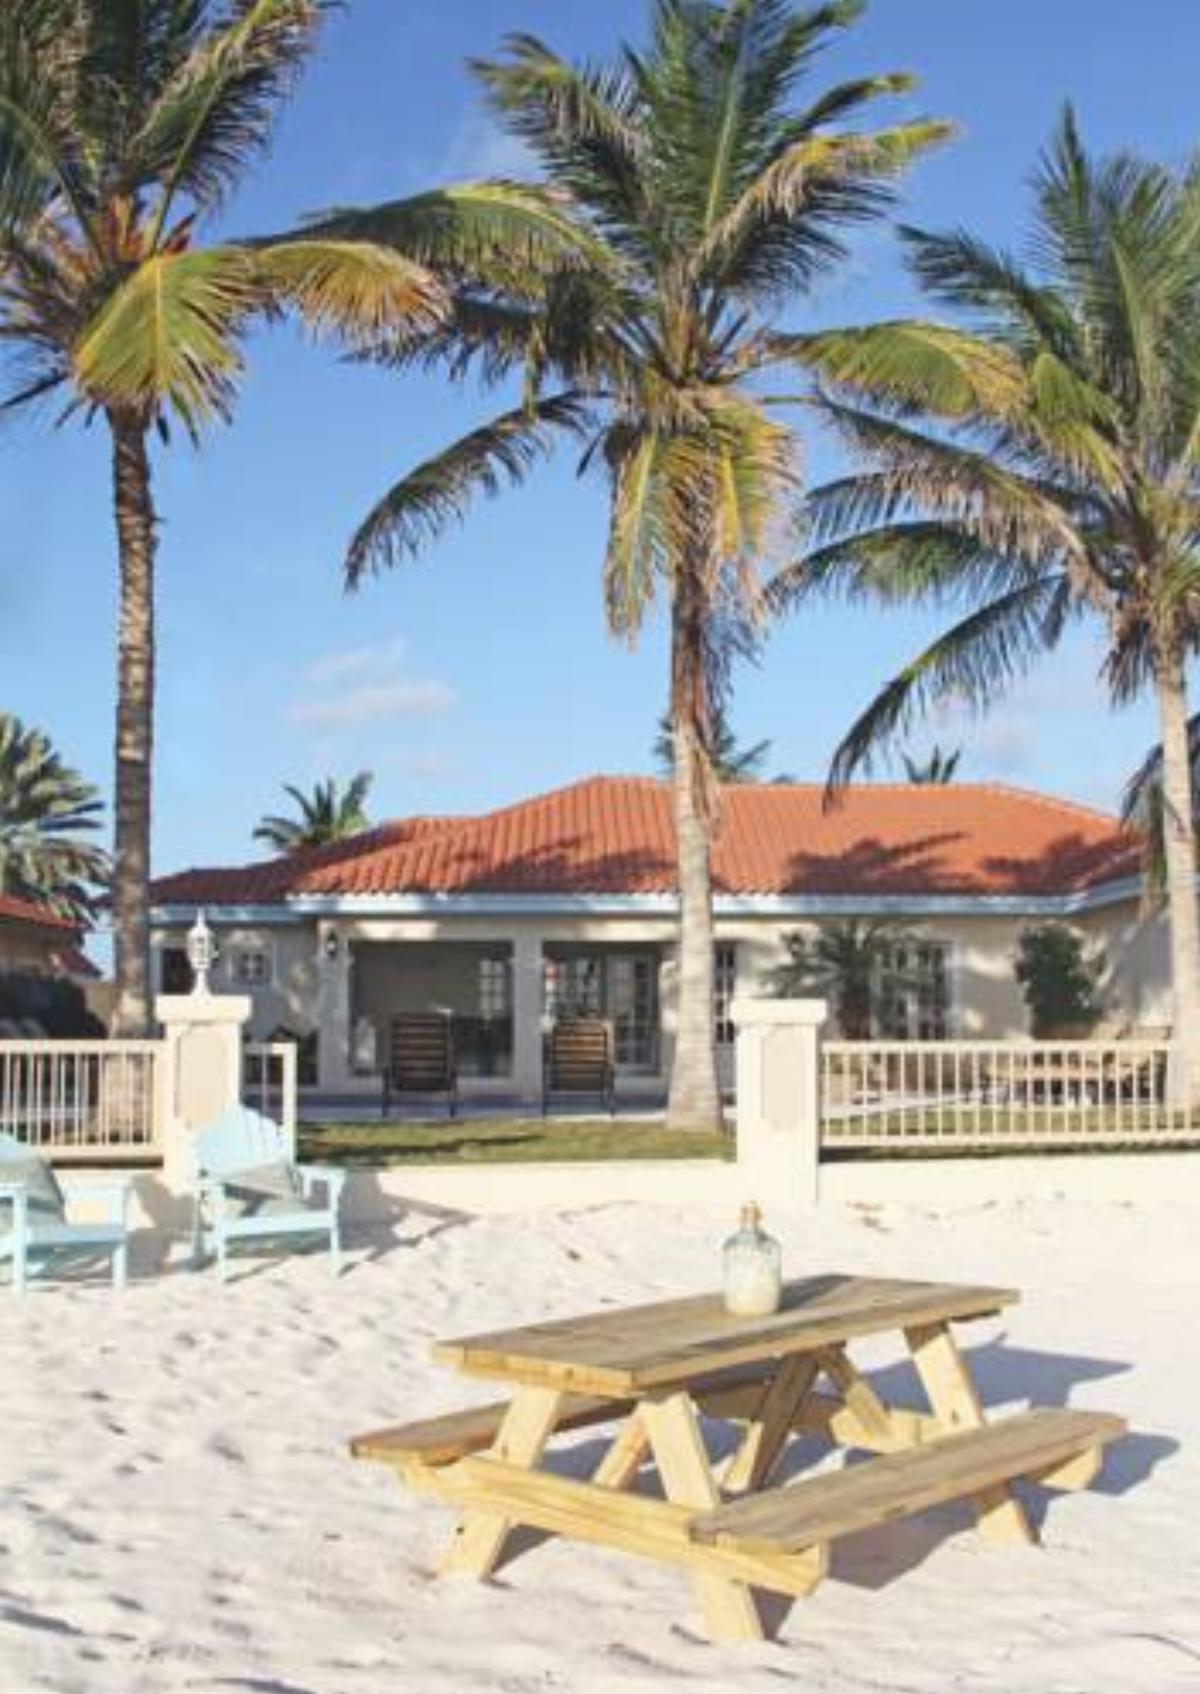 Beachcomber Villa Aruba Hotel Palm-Eagle Beach Aruba